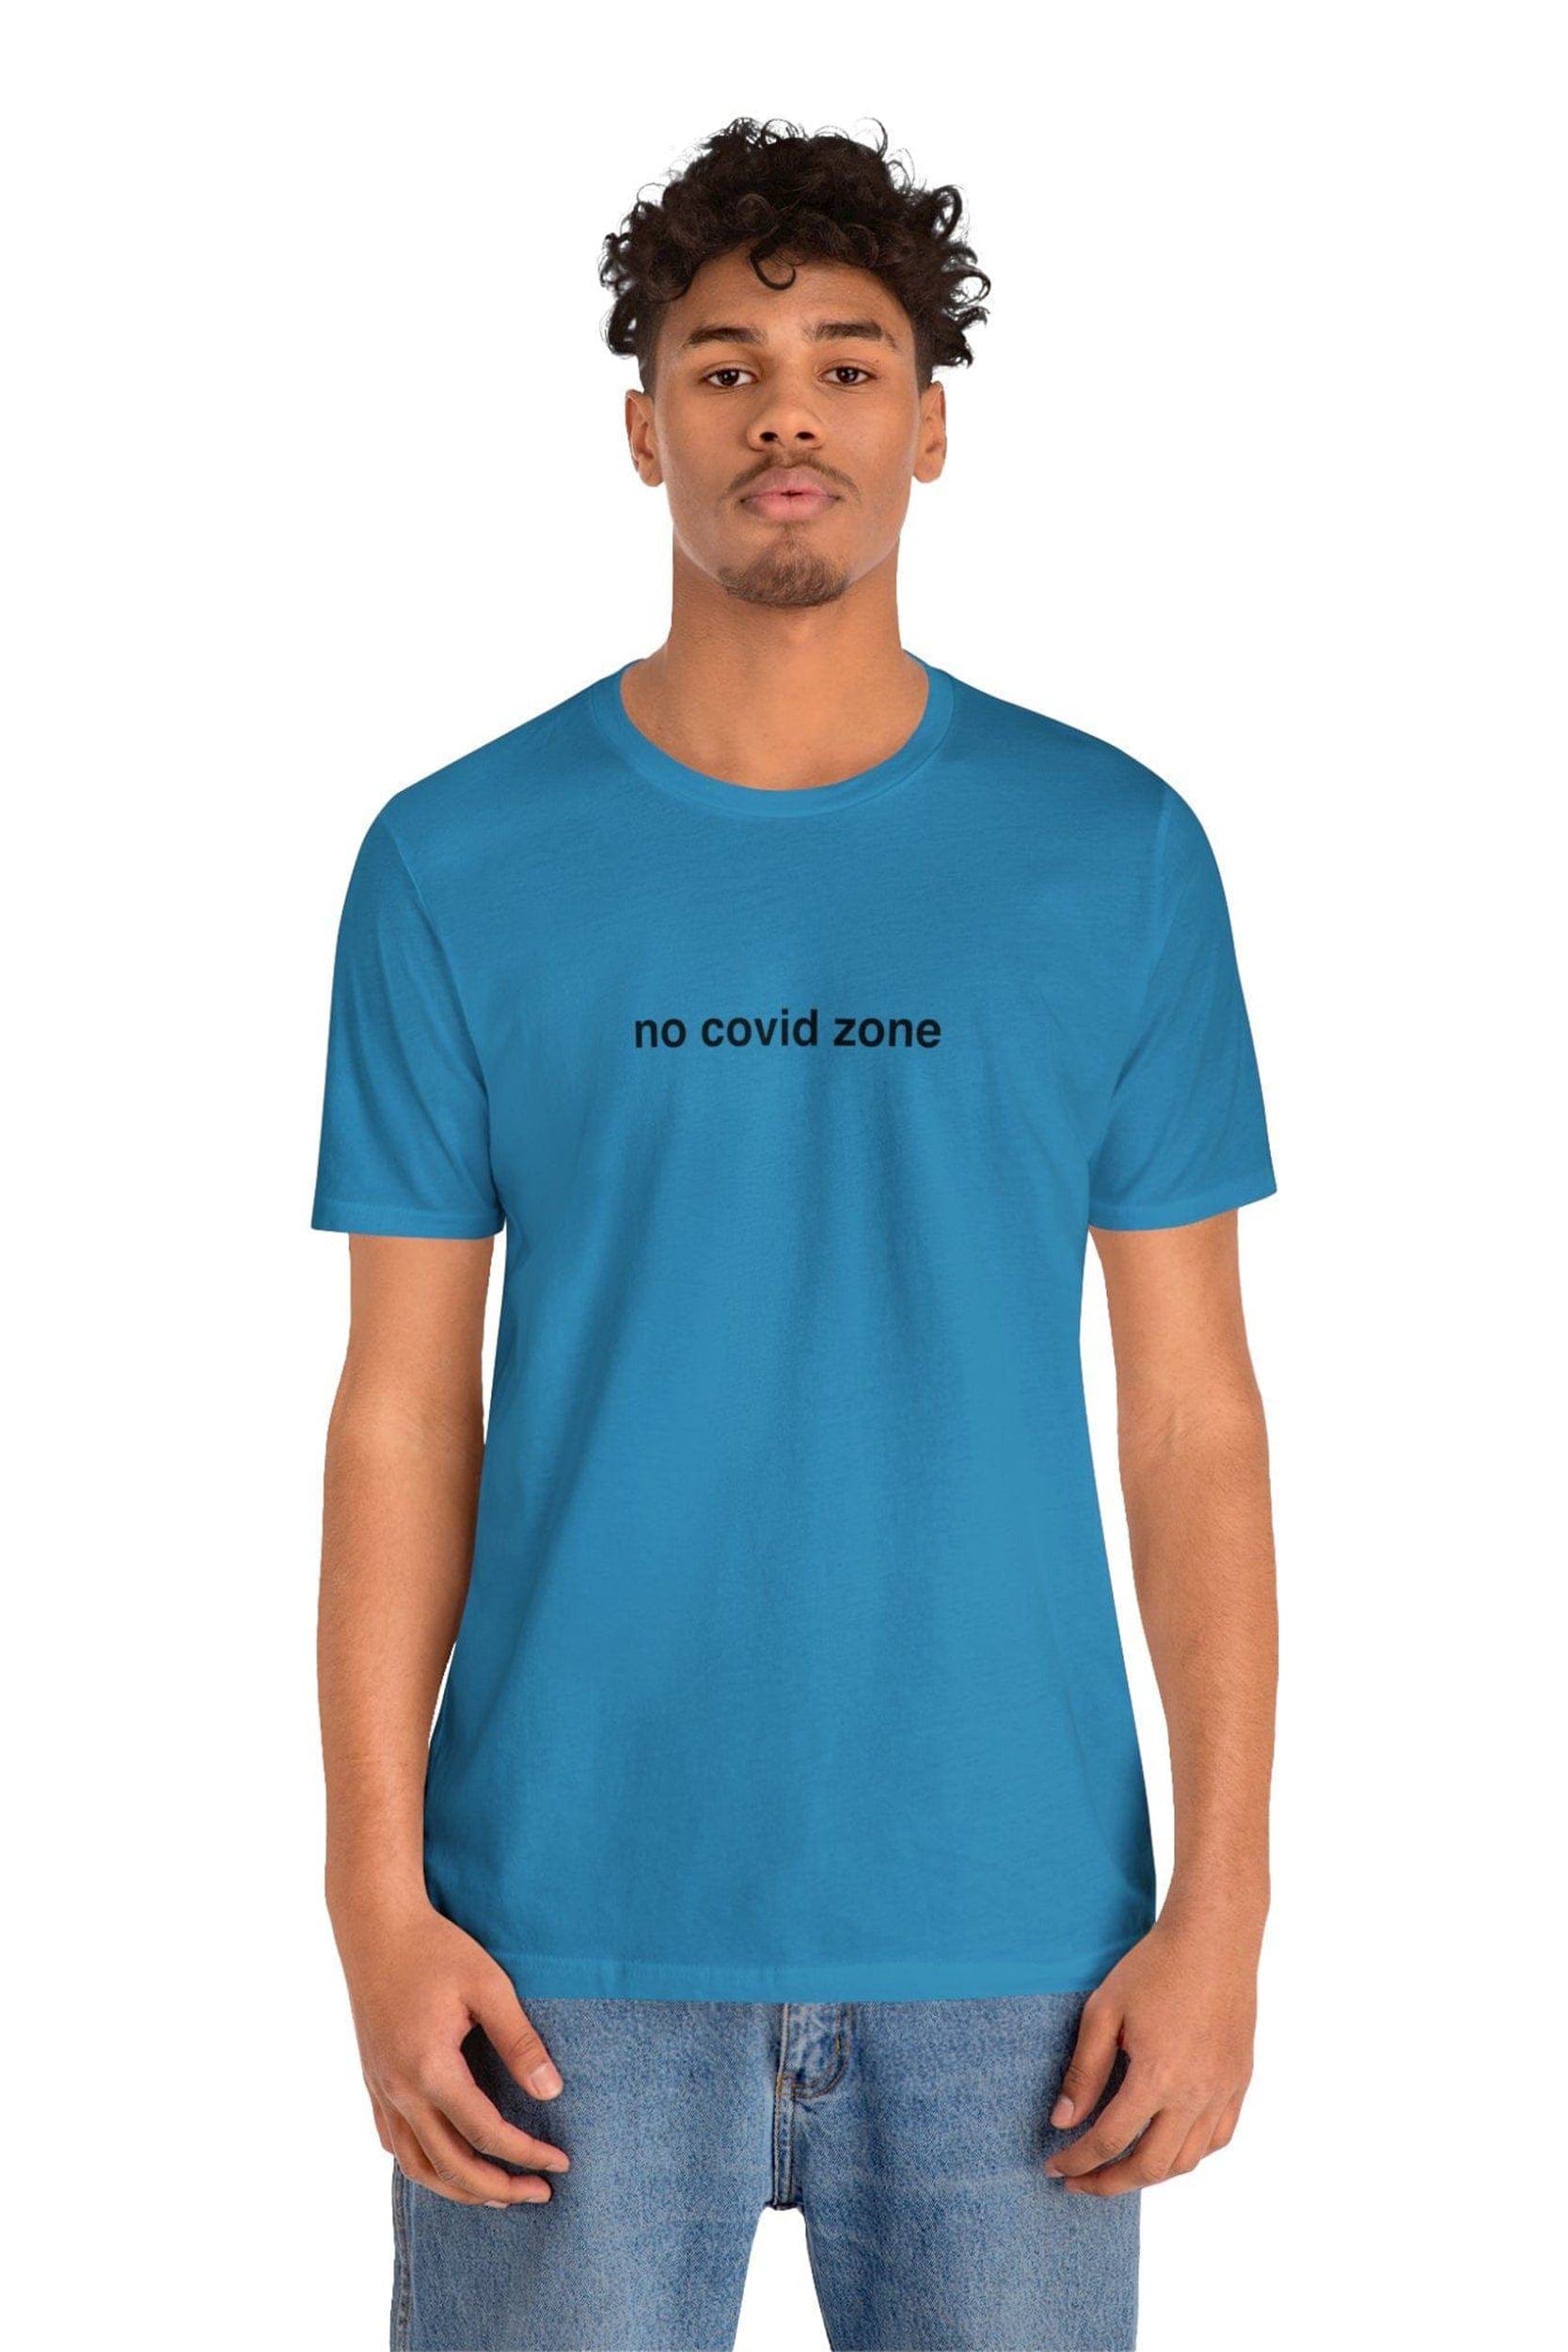 "no covid zone" T-Shirt